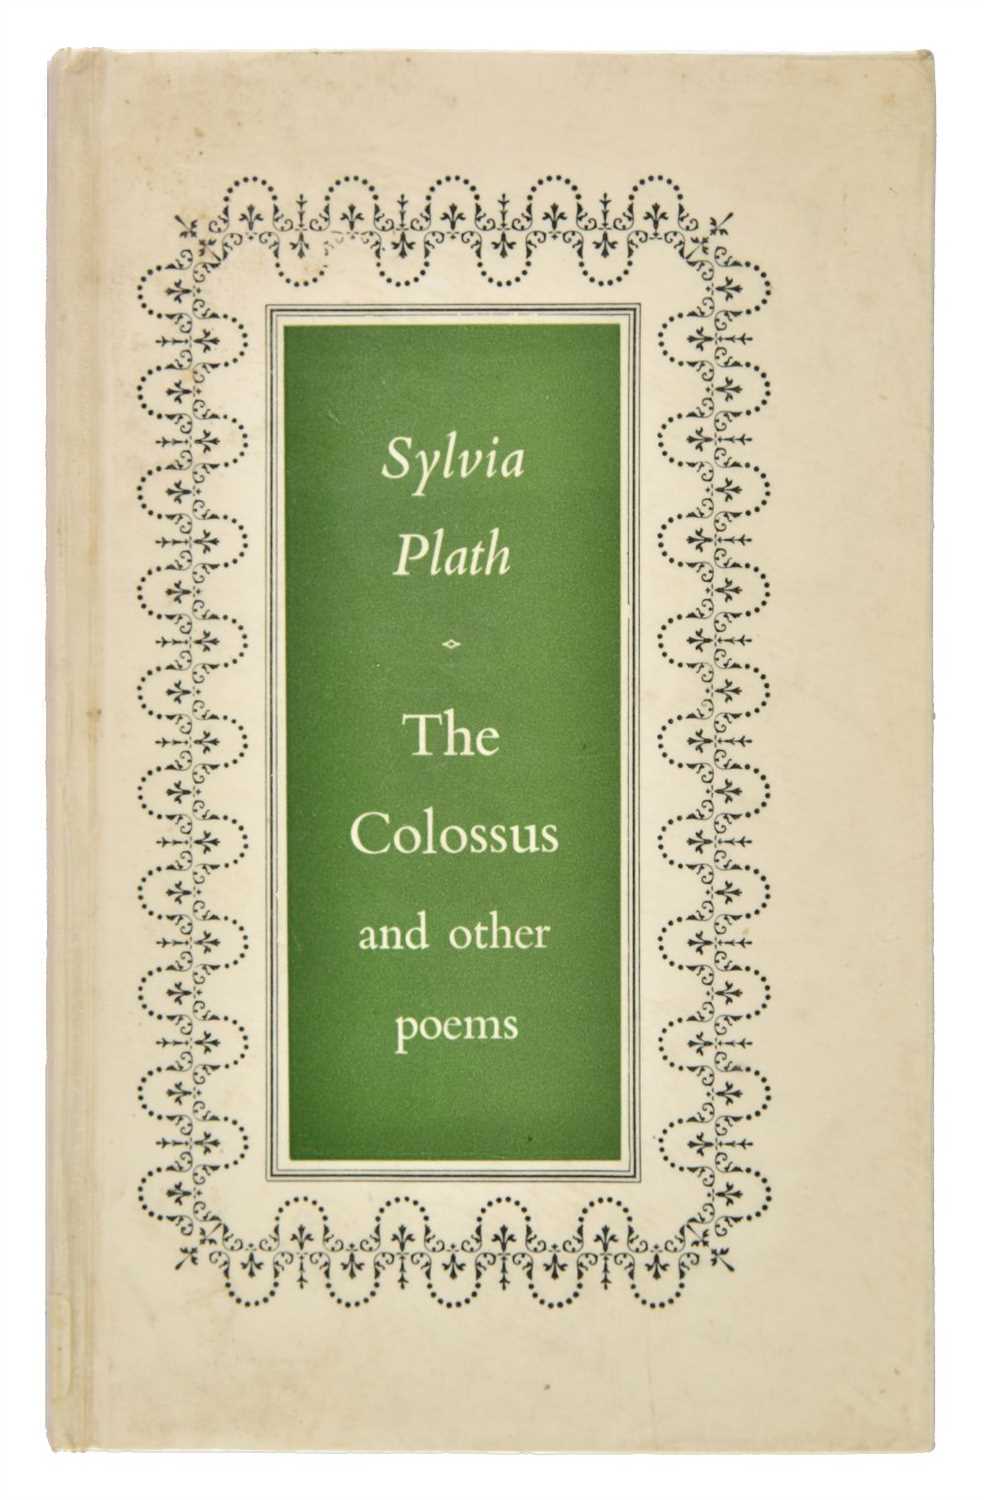 Lot 426 - Plath (Sylvia). The Colossus, 1st edition, 1960